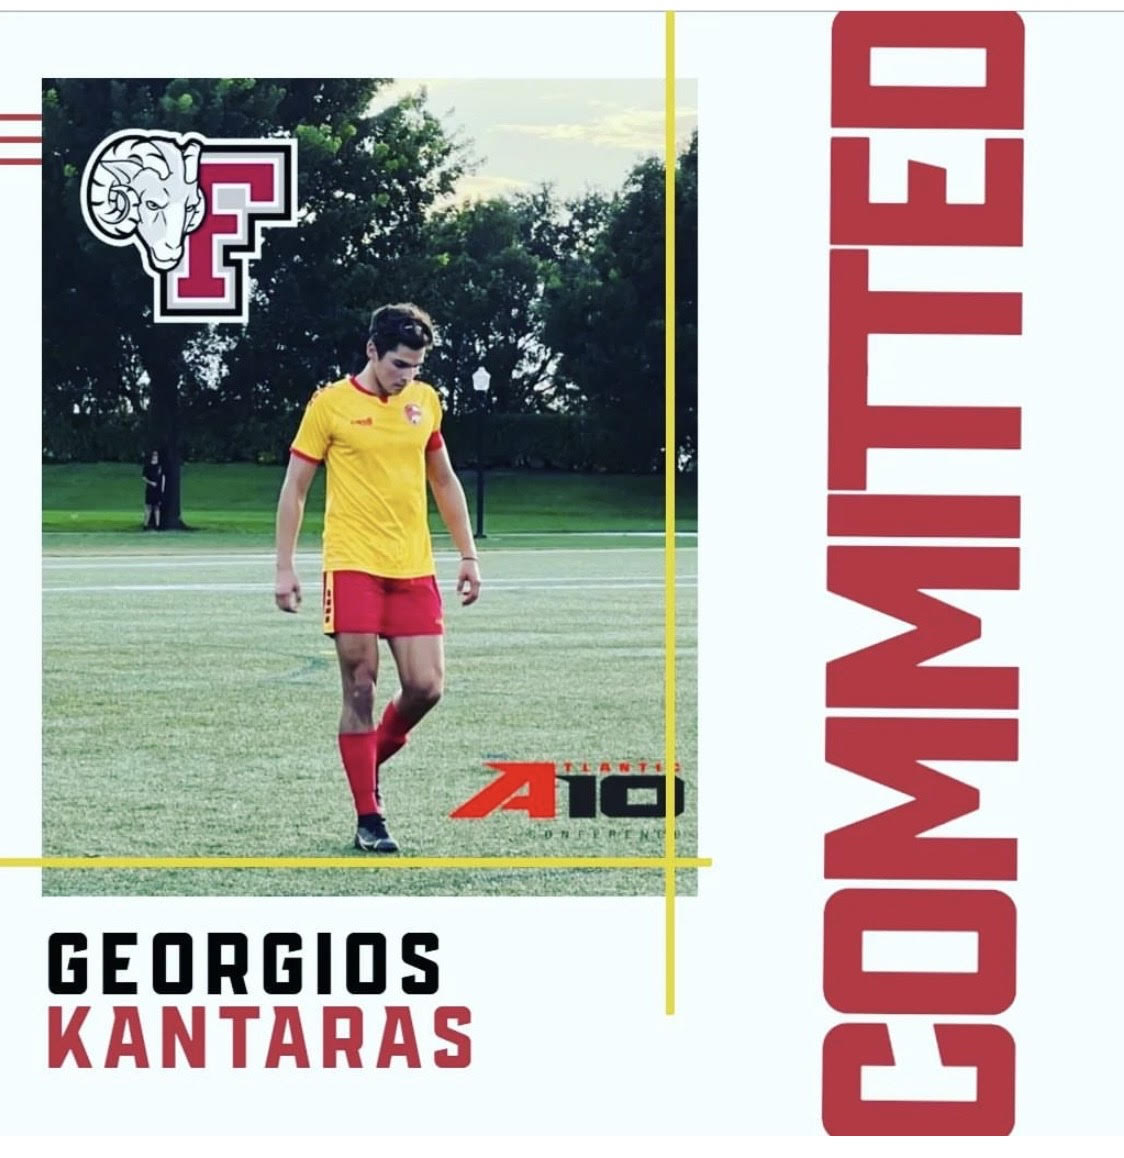 Georgios Kantaras committed to Fordham University